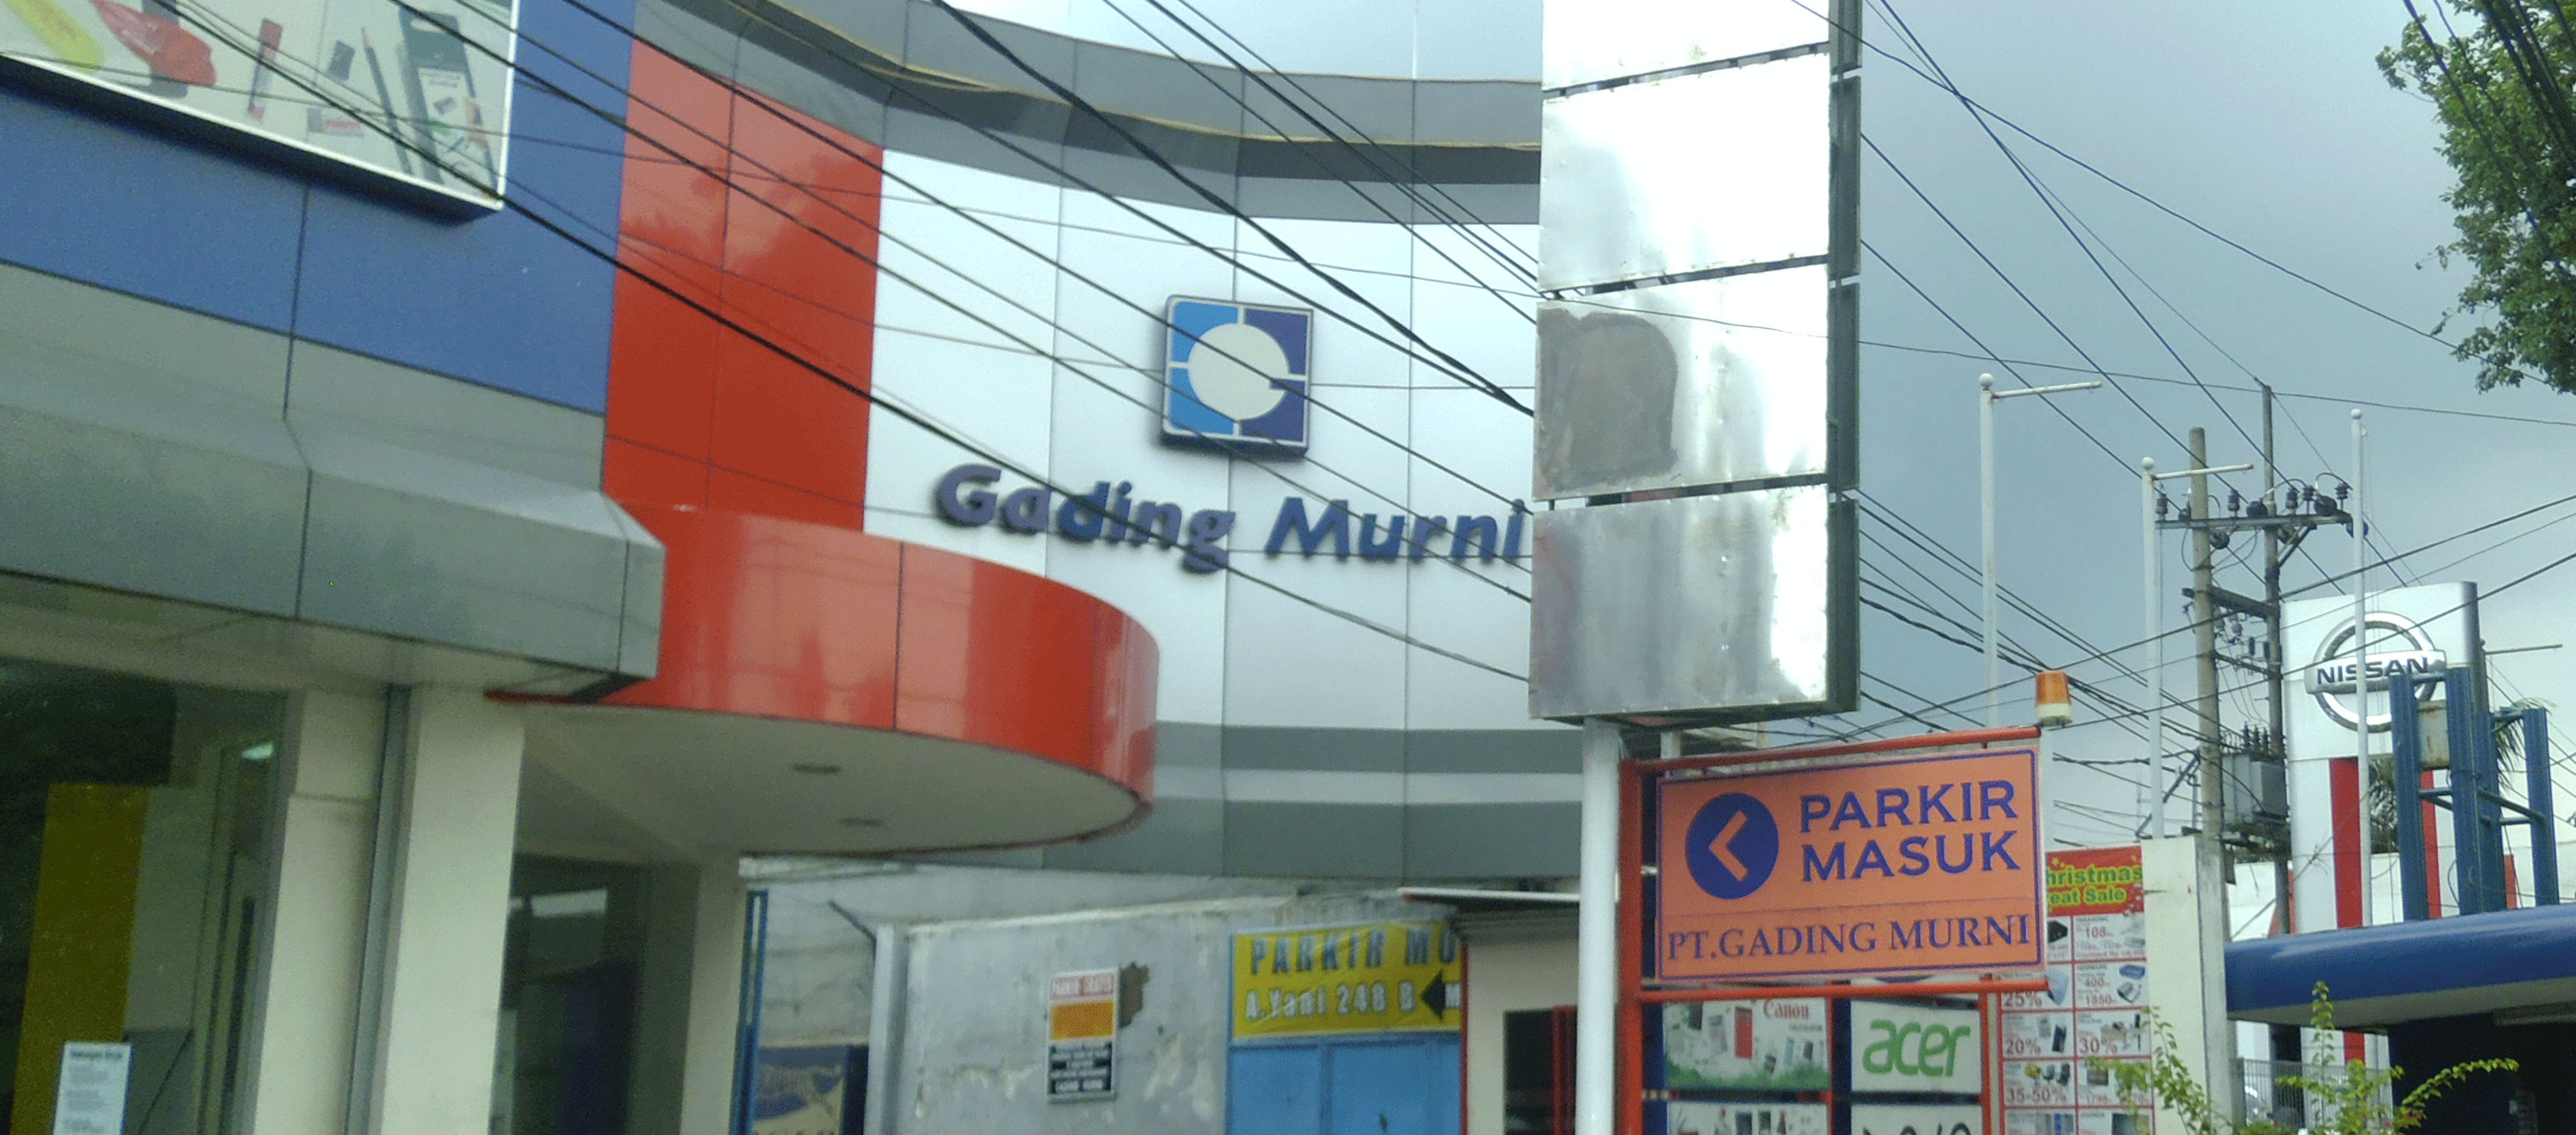  Gading  Murni  Digital